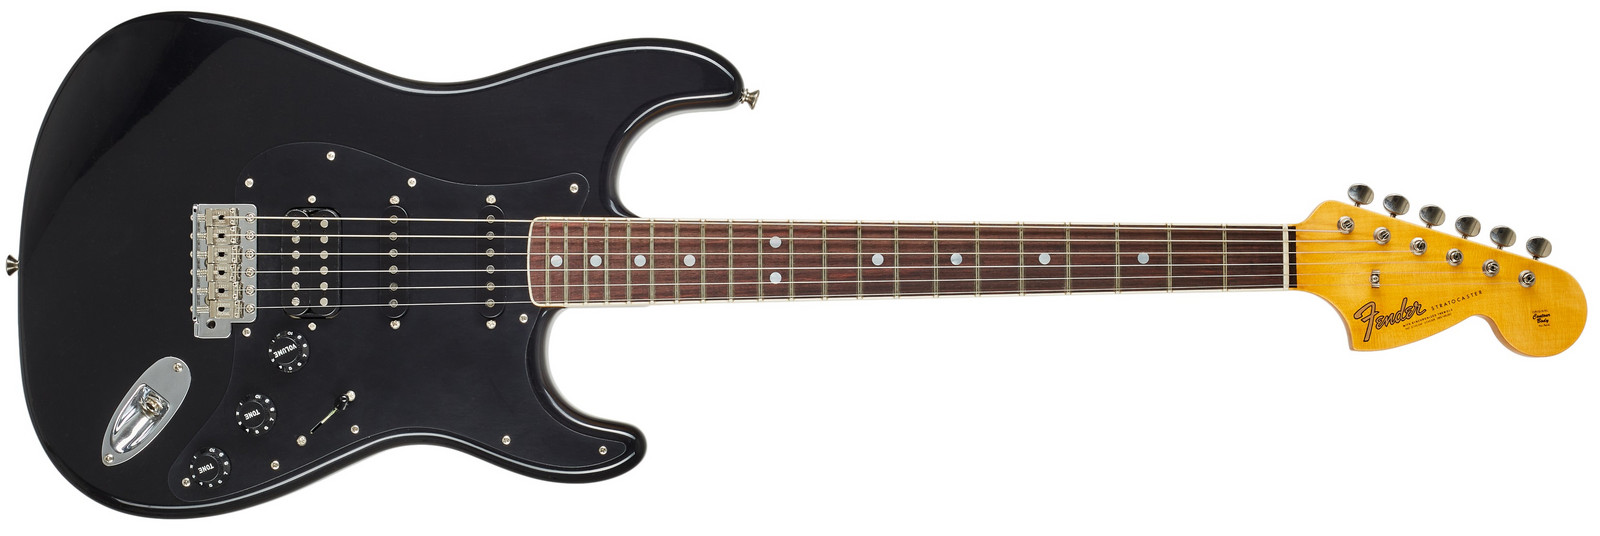 Fender Custom Shop Limited Edition 67 HSS Stratocaster JRN Relic Black